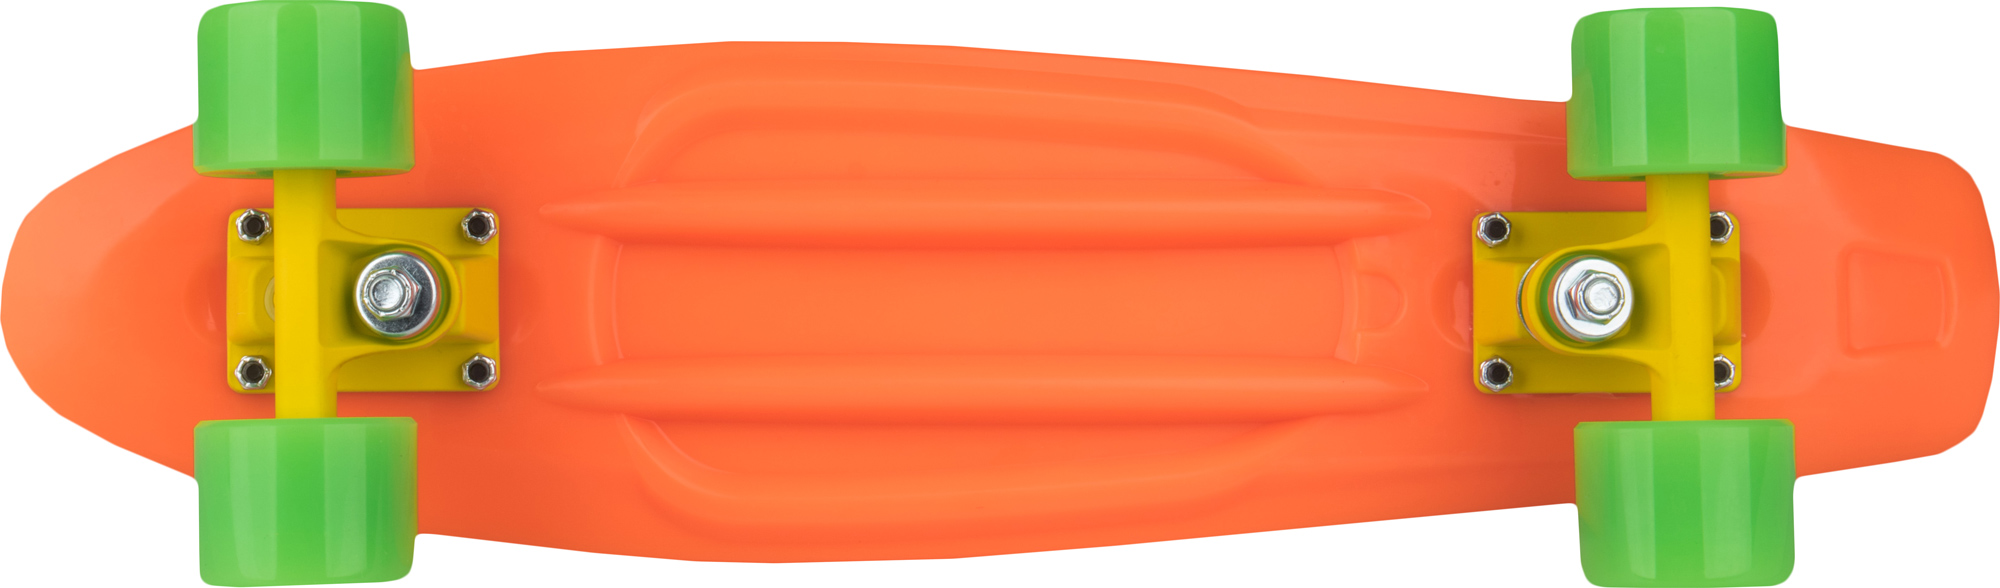 Skateboard de plastic